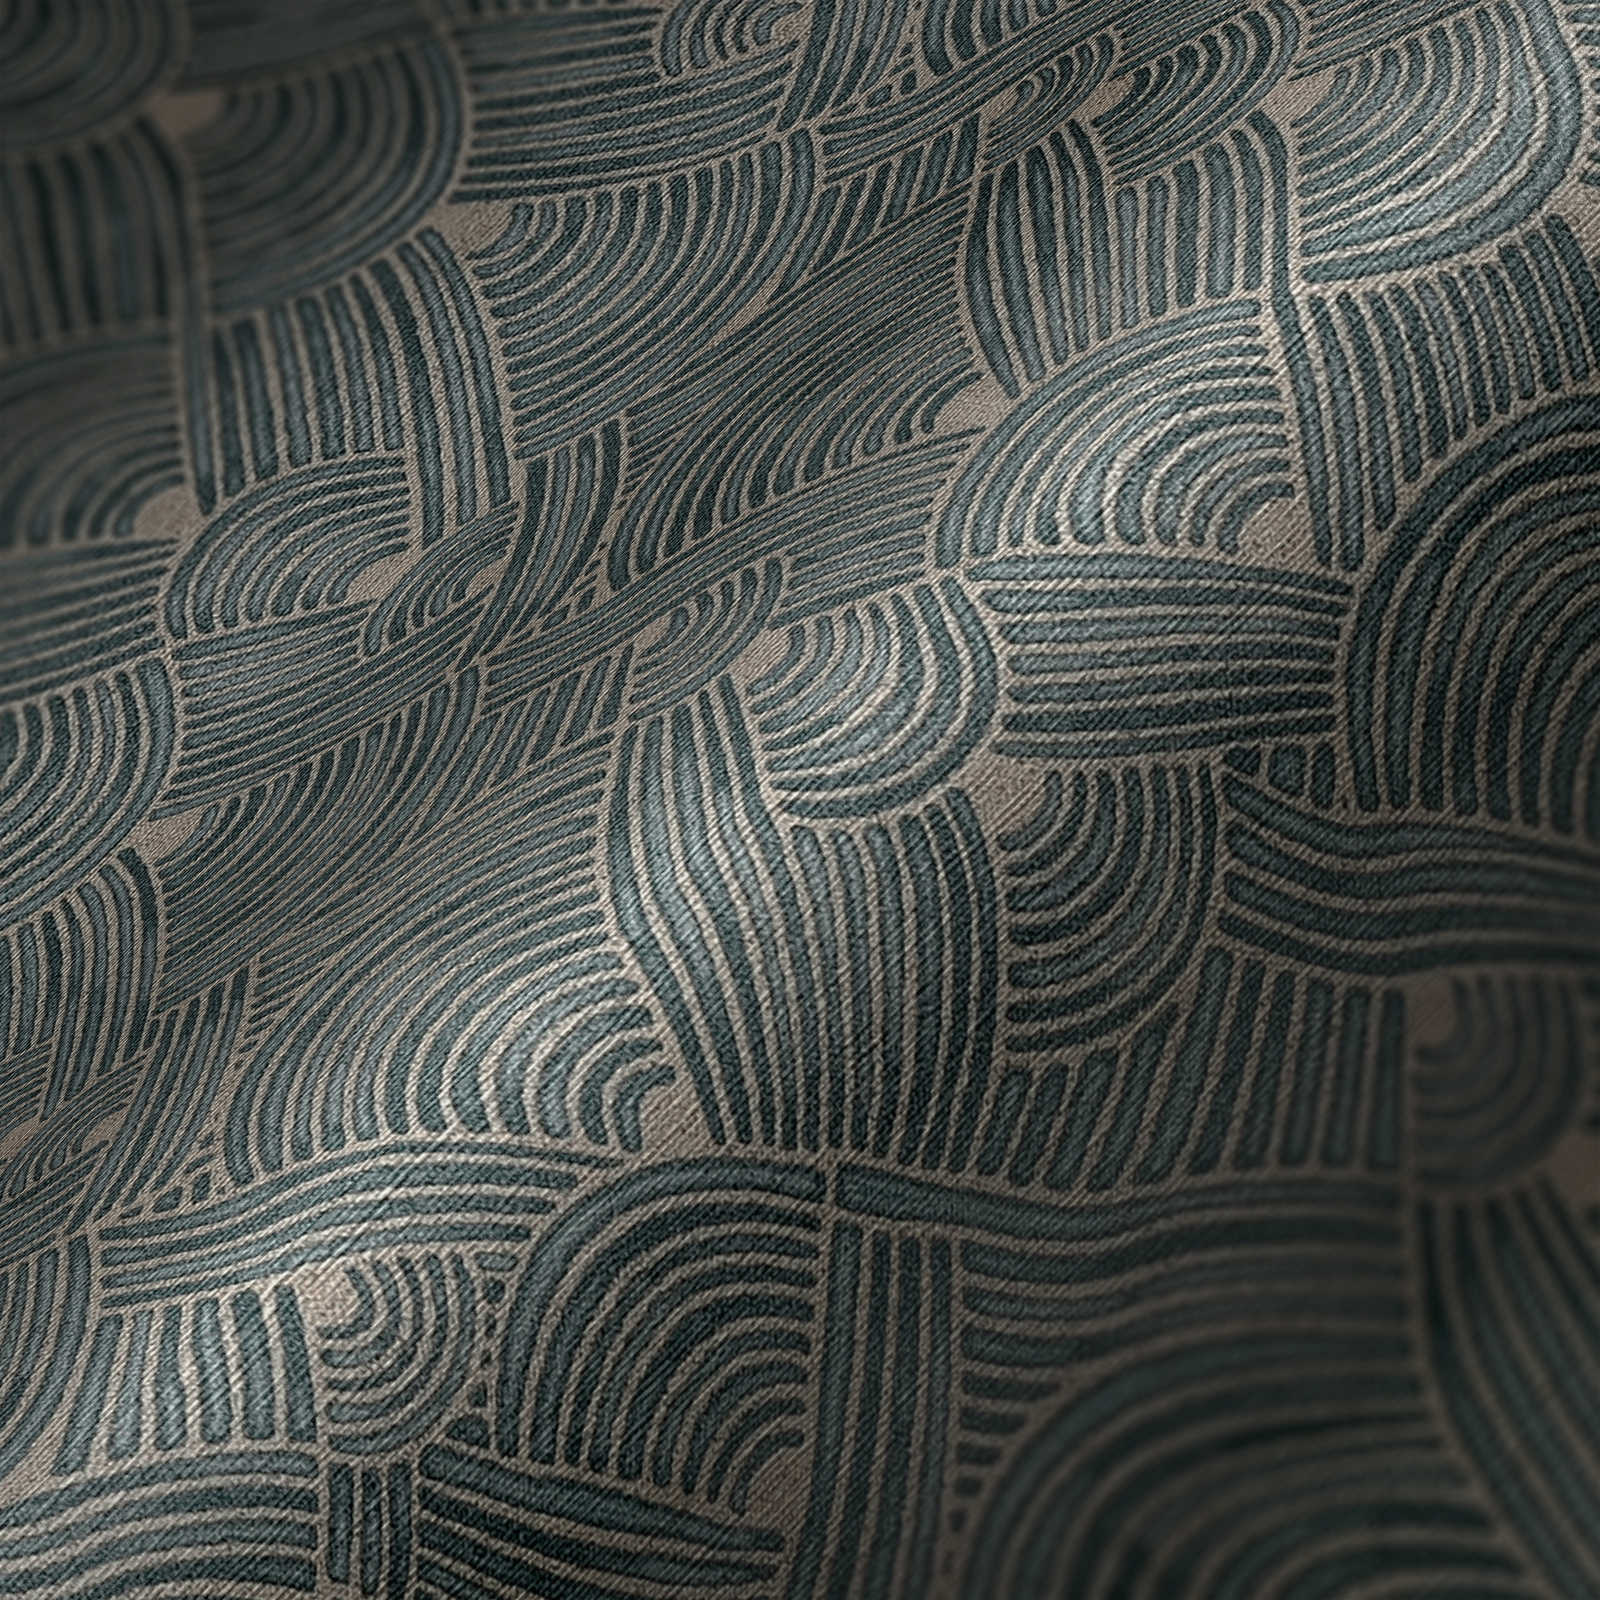             Vliestapete Ethno Design mit Korb-Optik – Blau, Grau, Beige
        